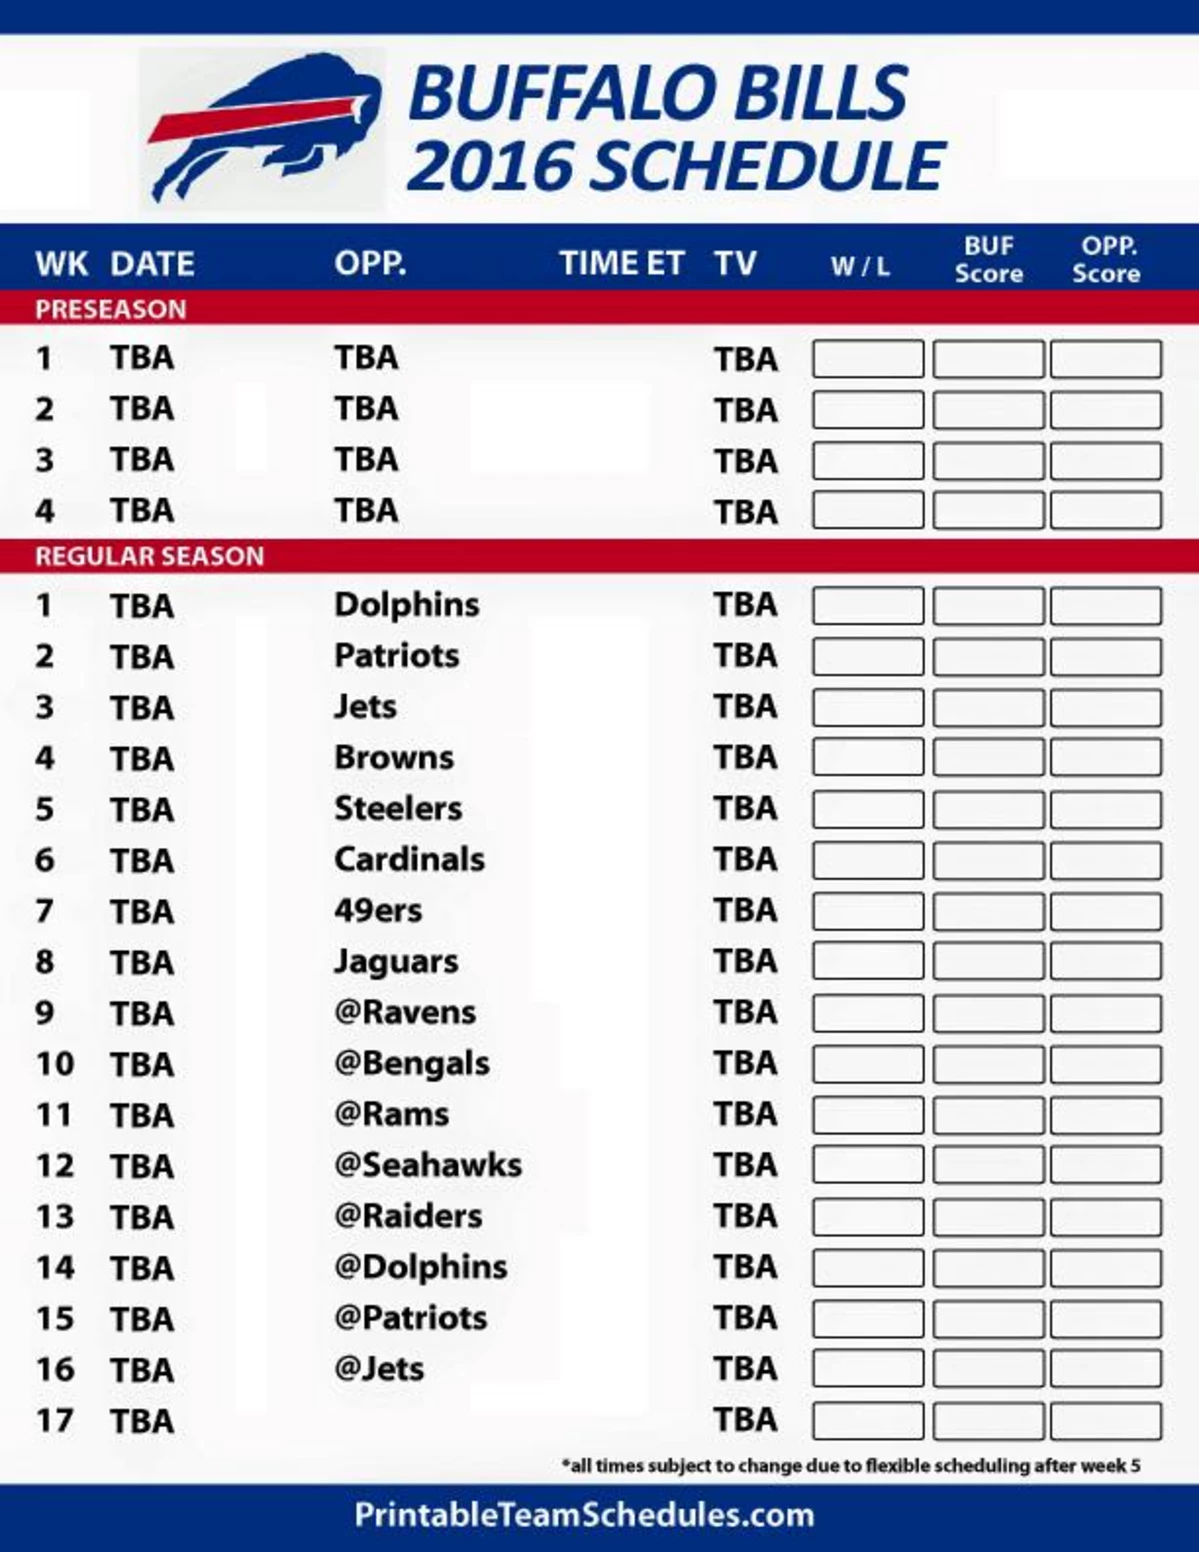 The Buffalo Bills 2016 Schedule